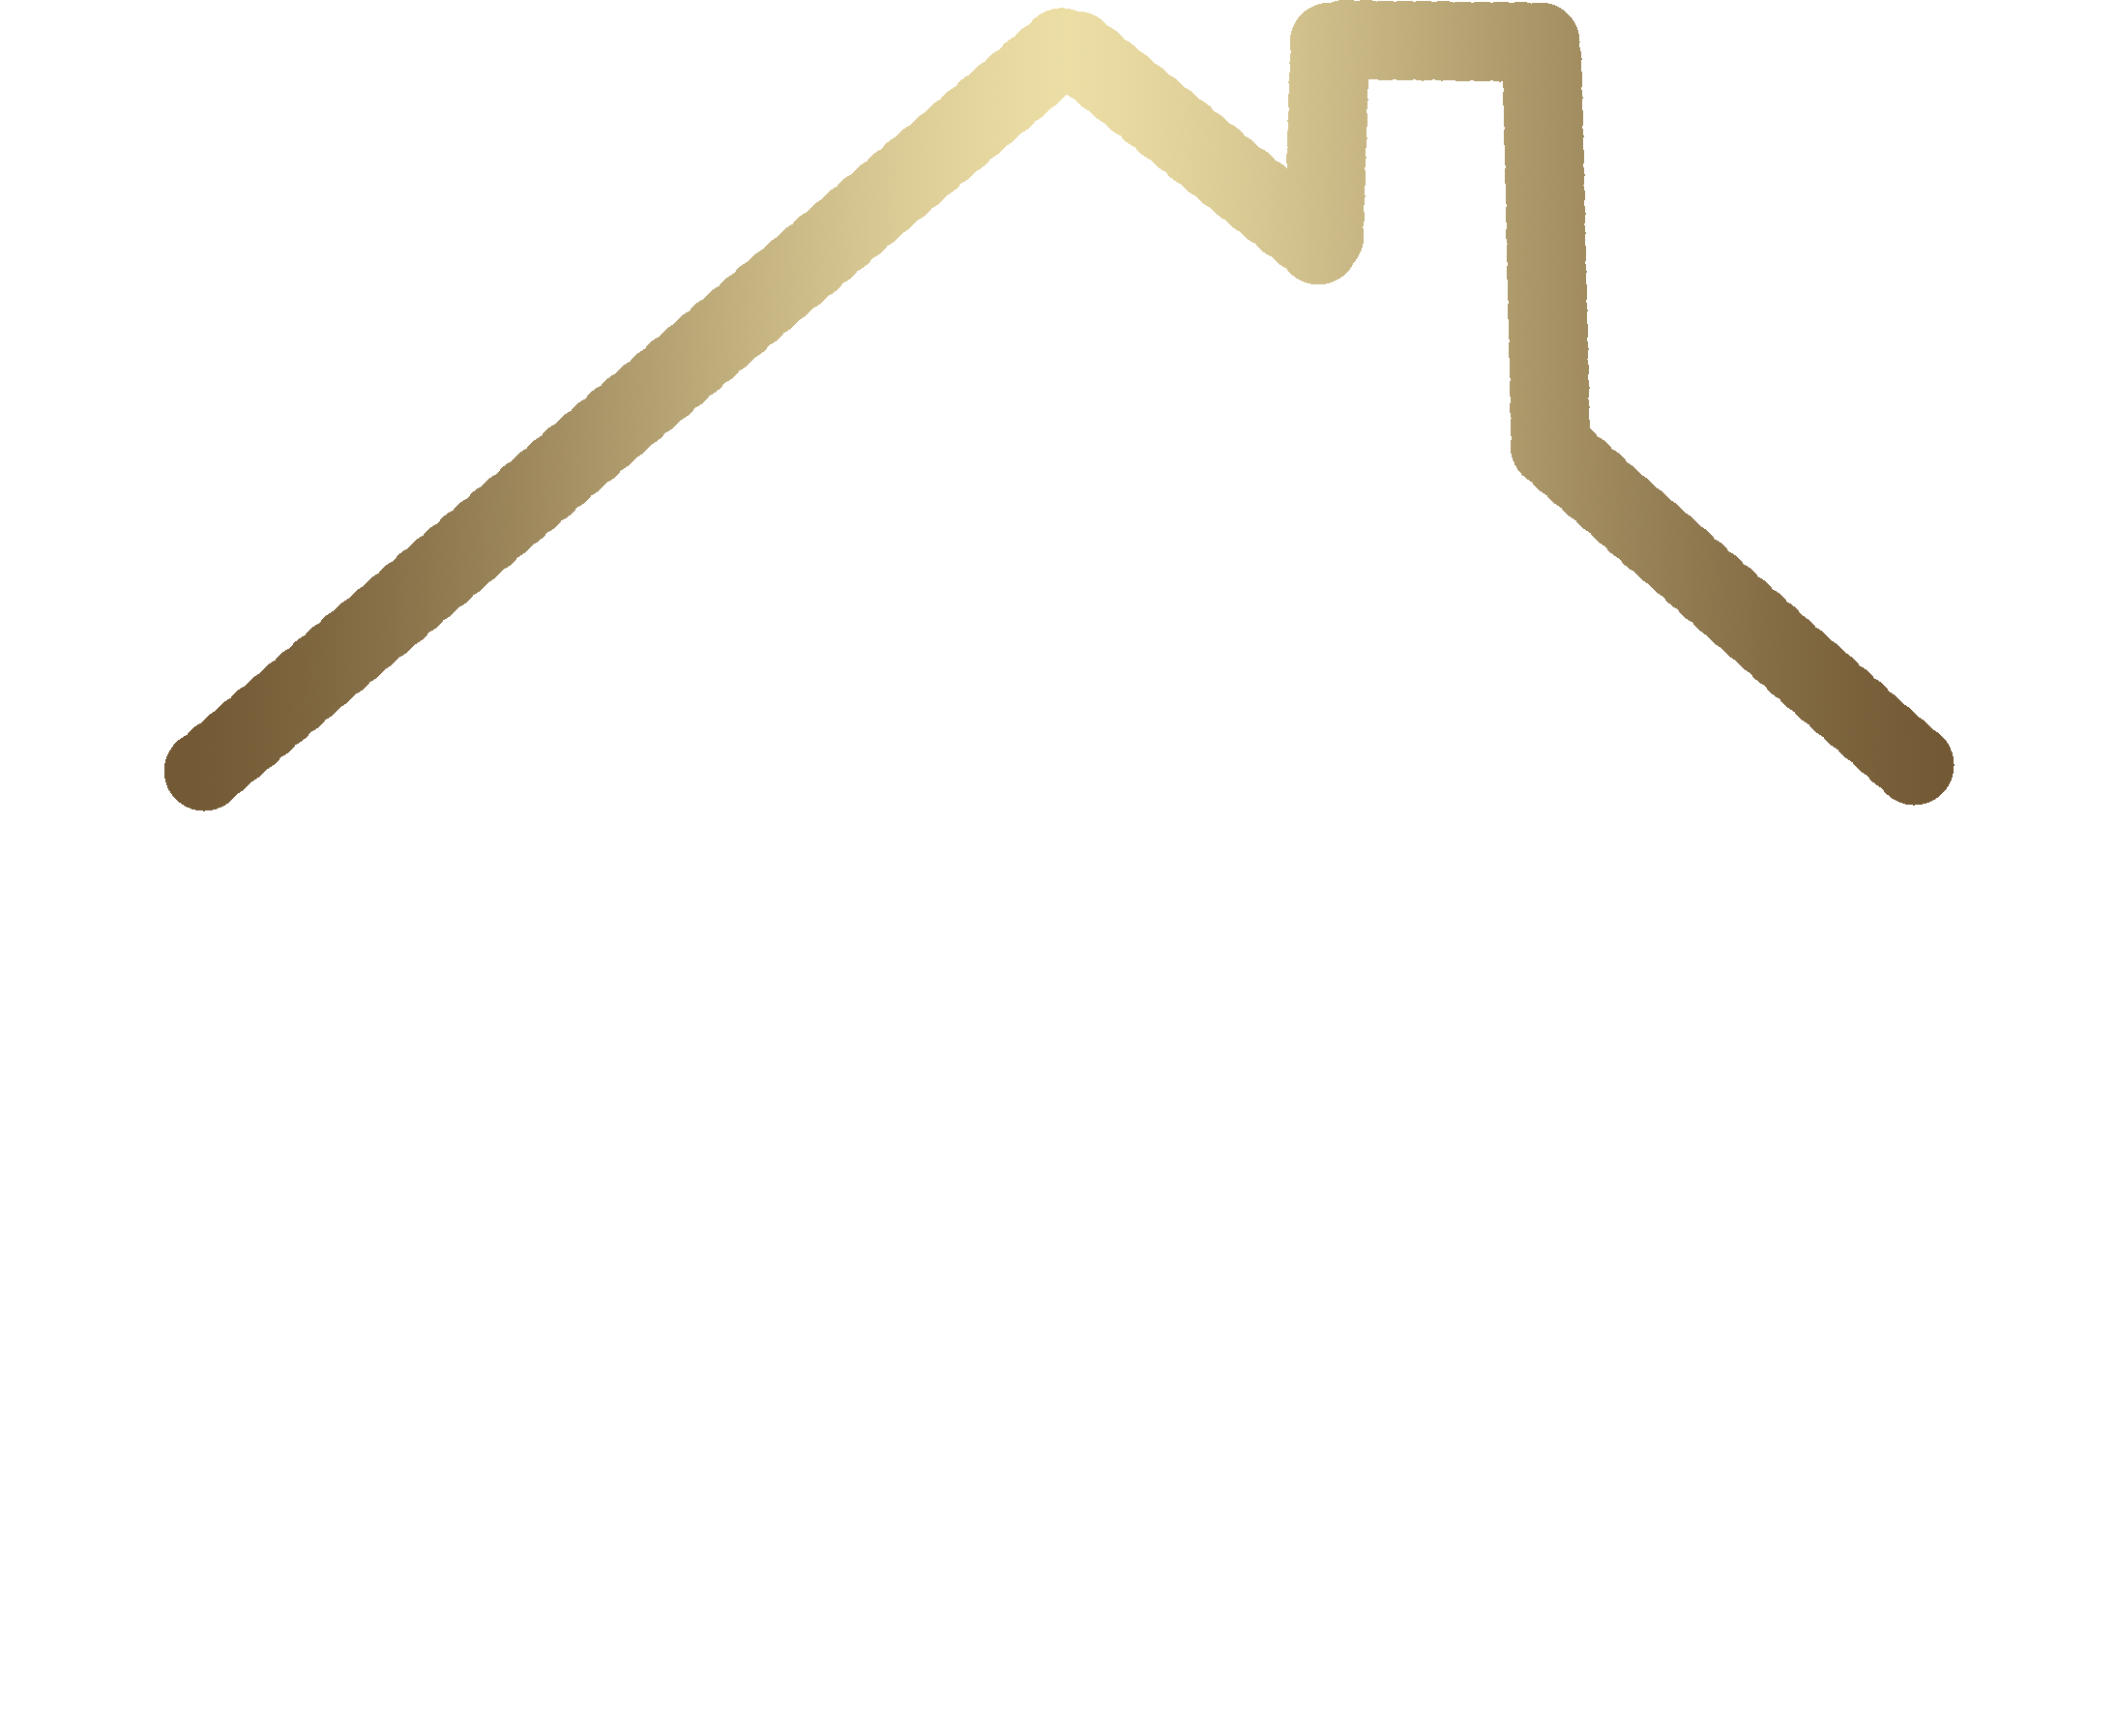 KMG logo updated